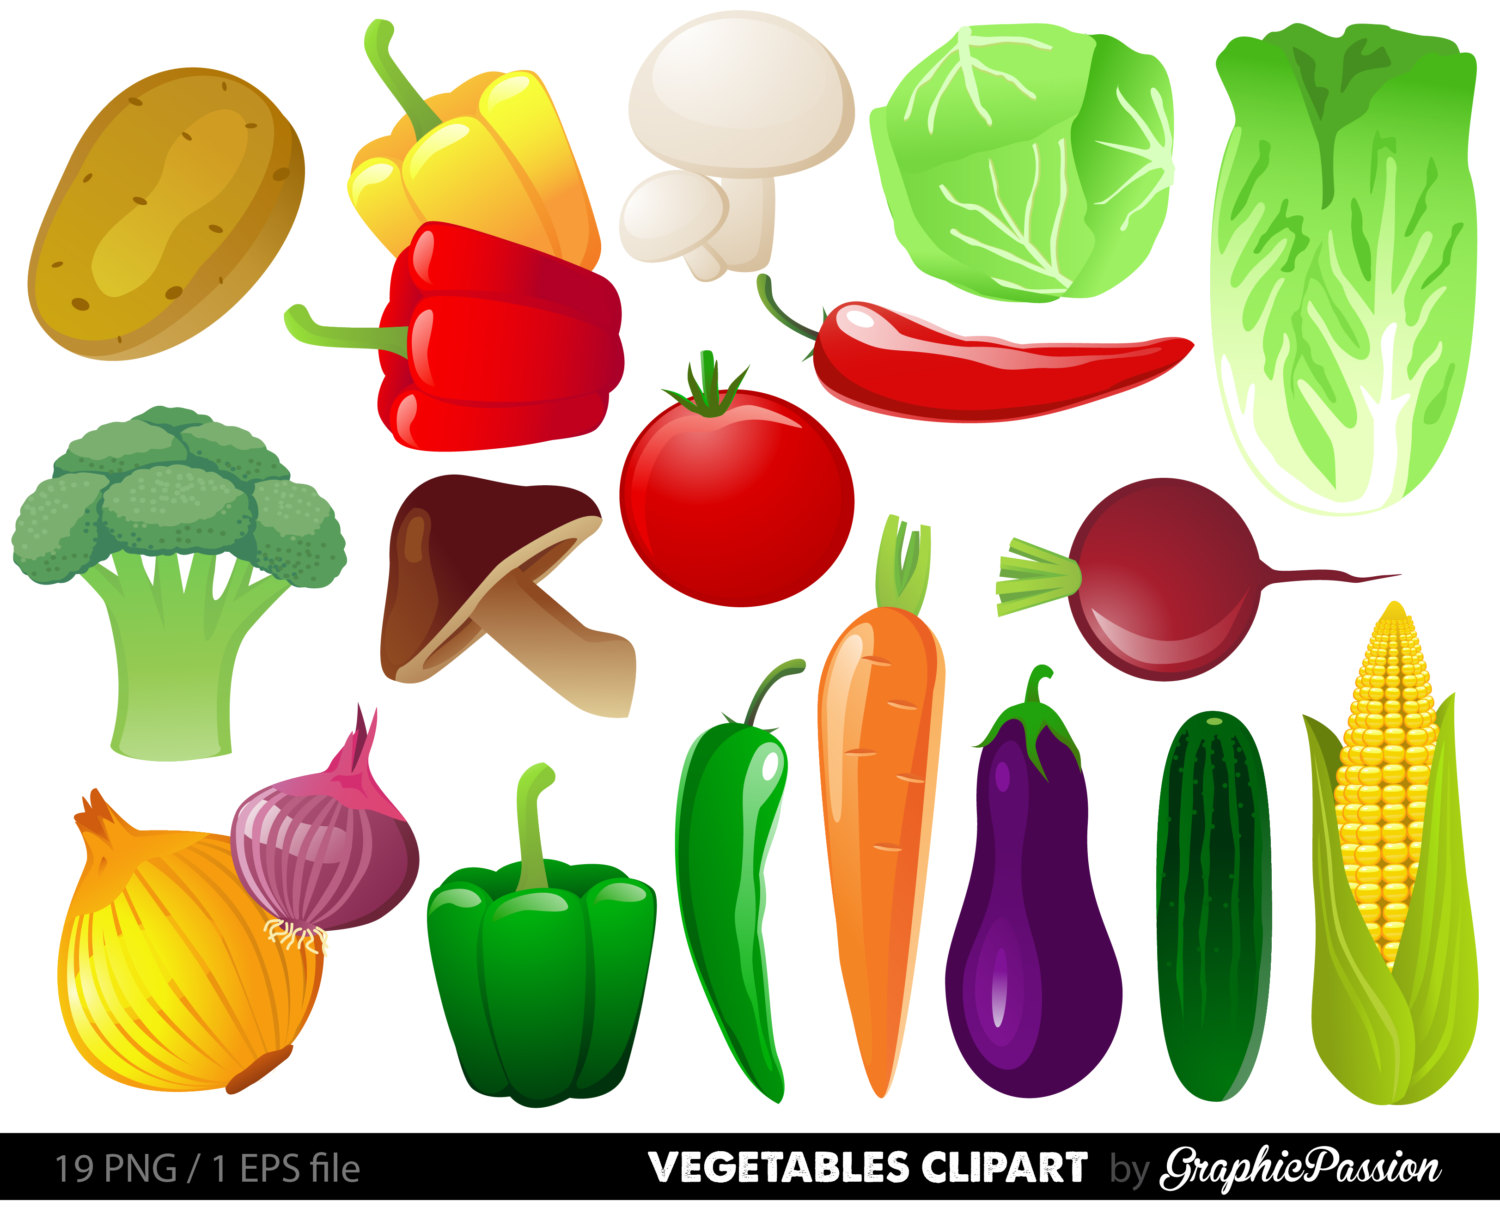 Vegetables clipart digital ve - Vegetable Clipart